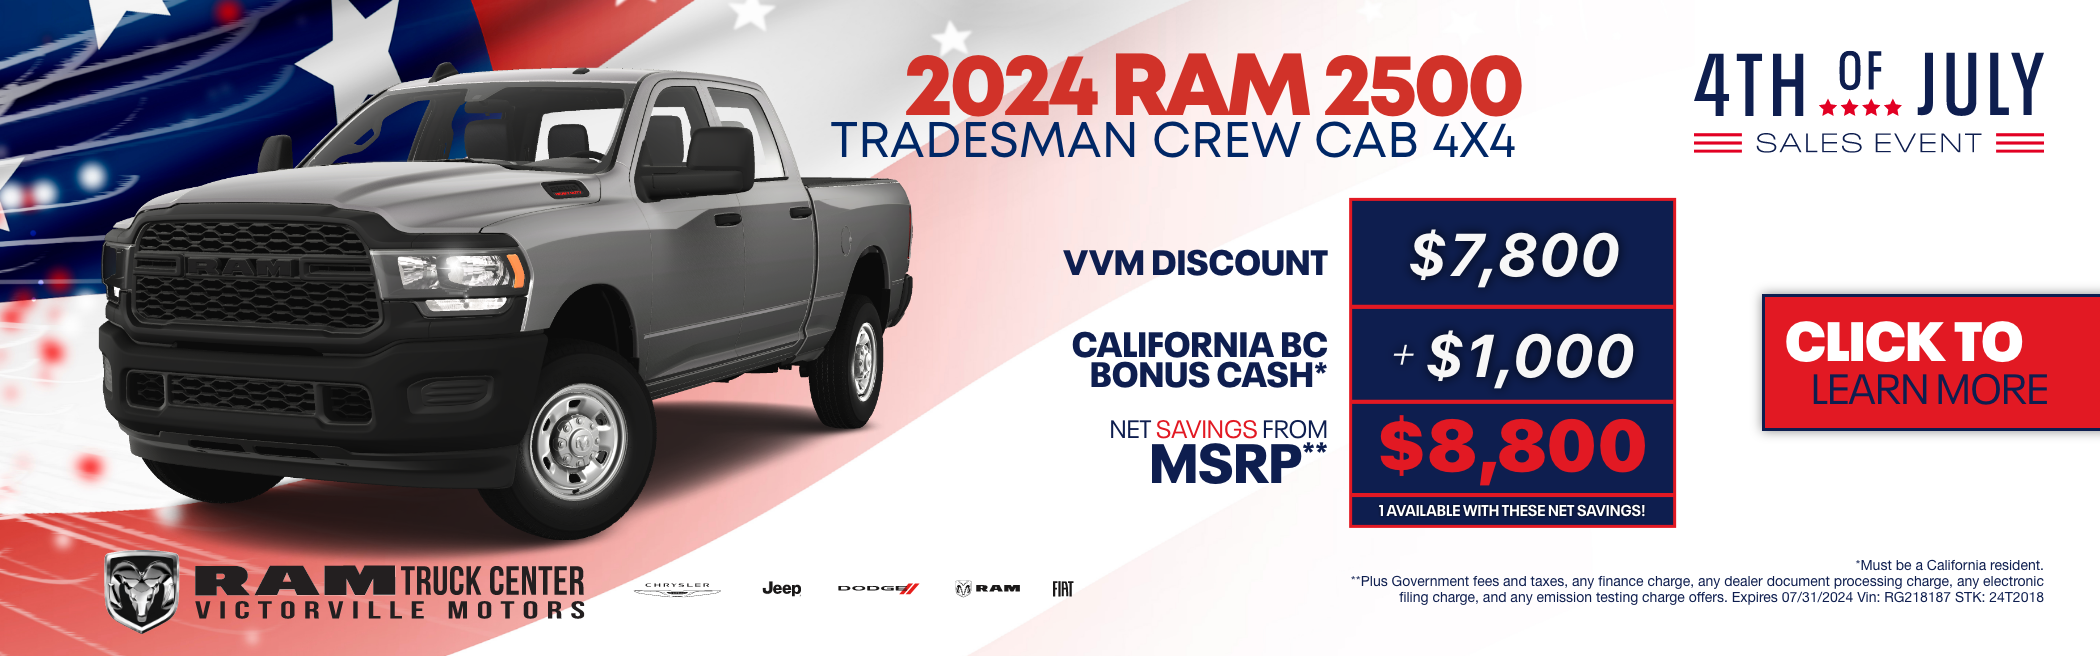 2024 RAM 2500 Tradesman Crew Cab 4X4